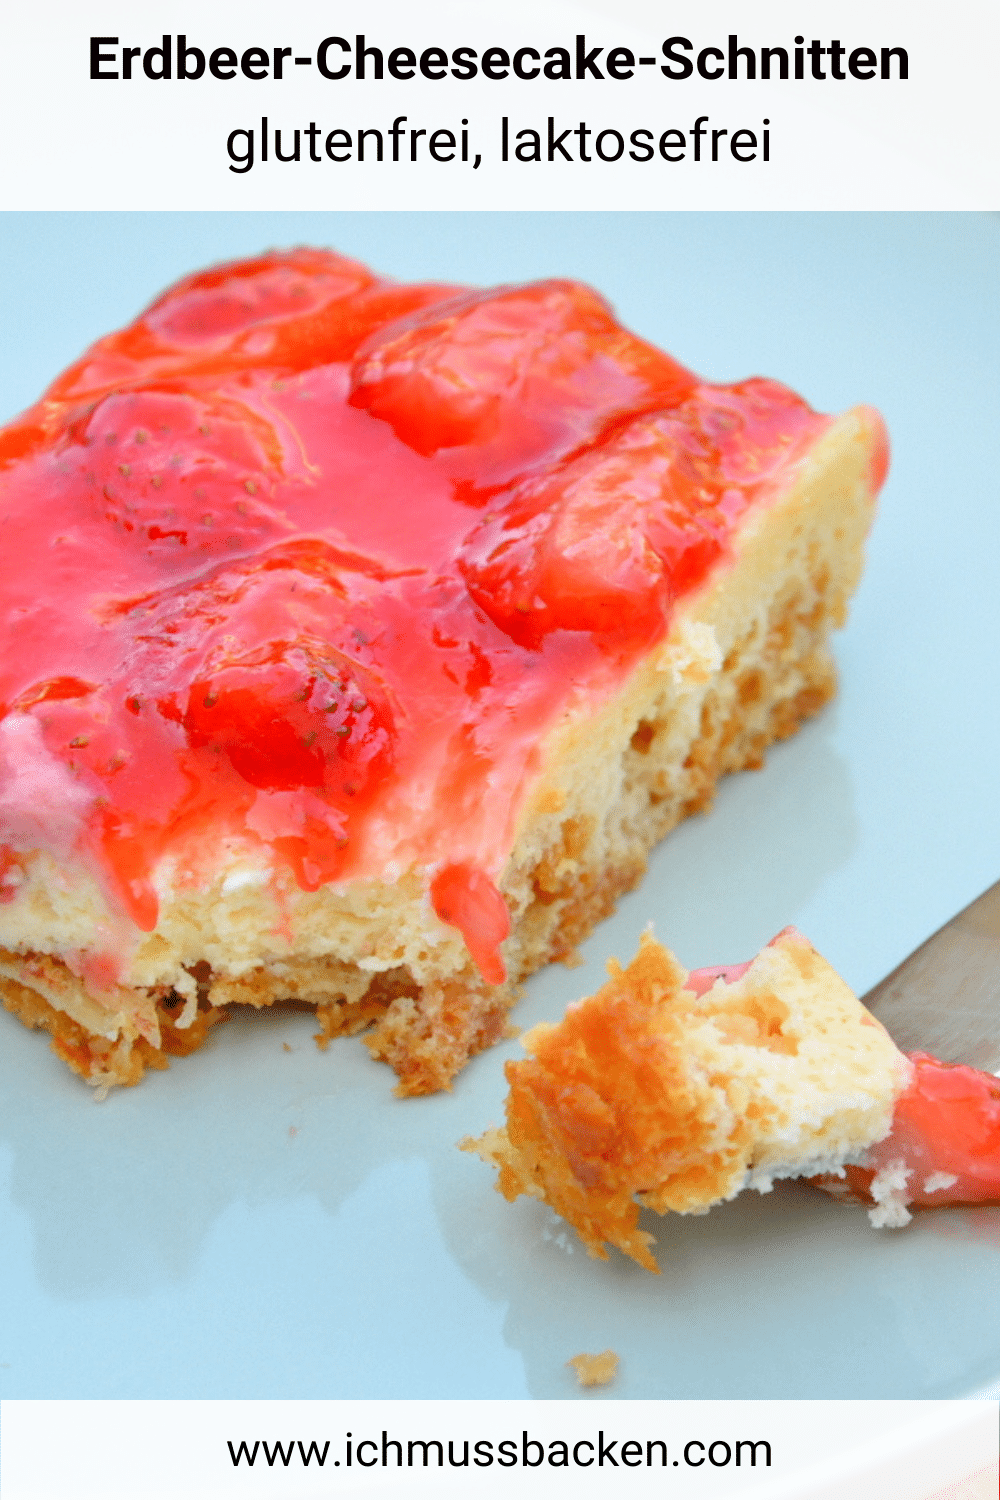 Erdbeer-Cheesecake-Schnitten, glutenfrei, laktosefrei